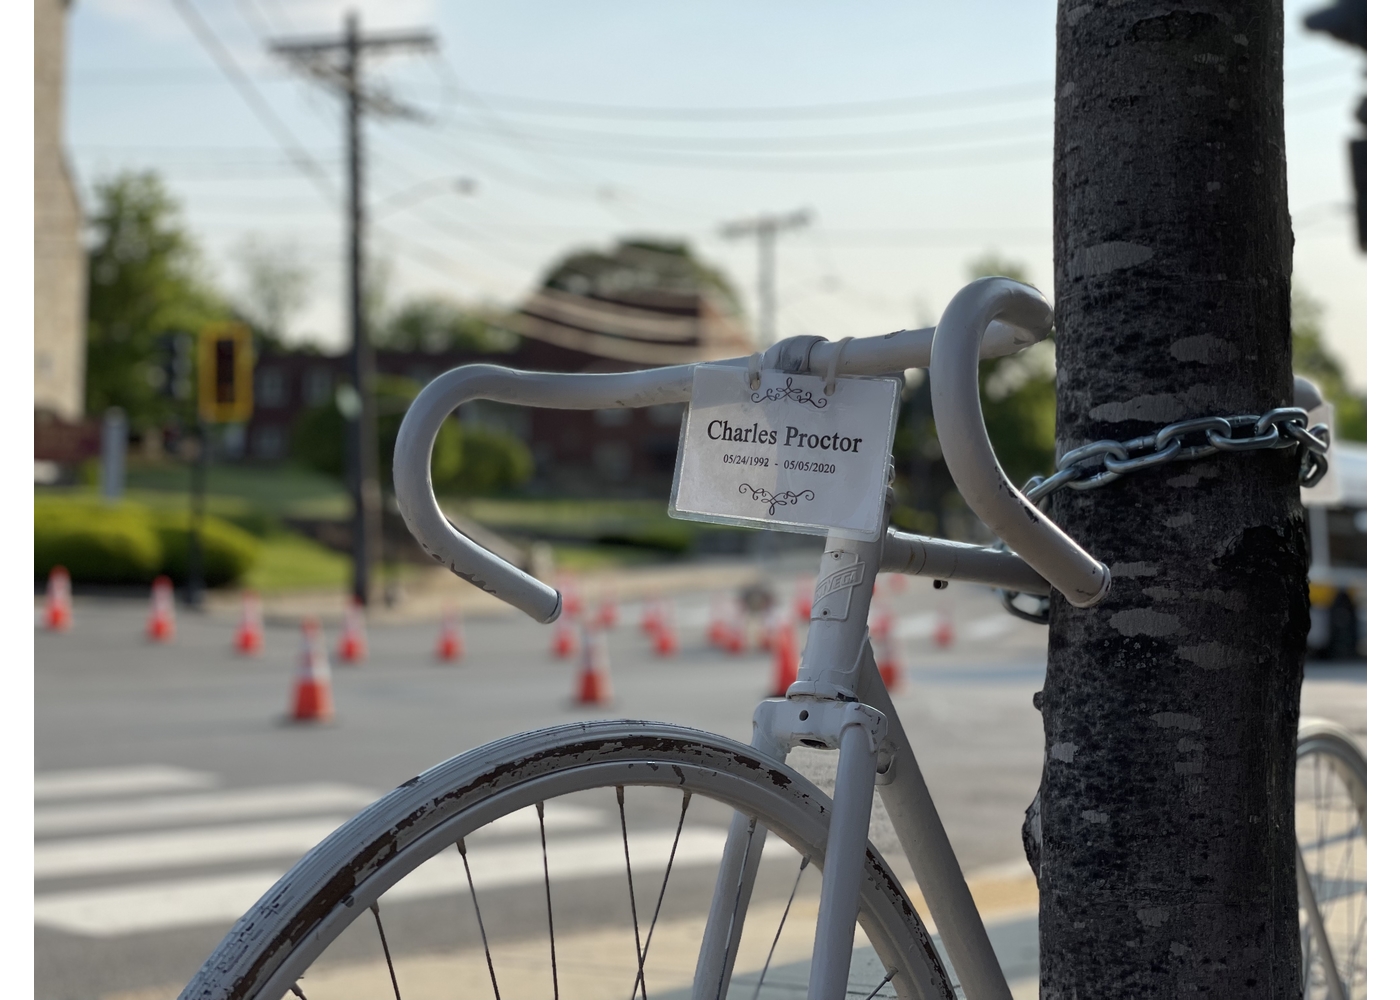 Charles Proctor's ghost bike memorial in Arlington, MA